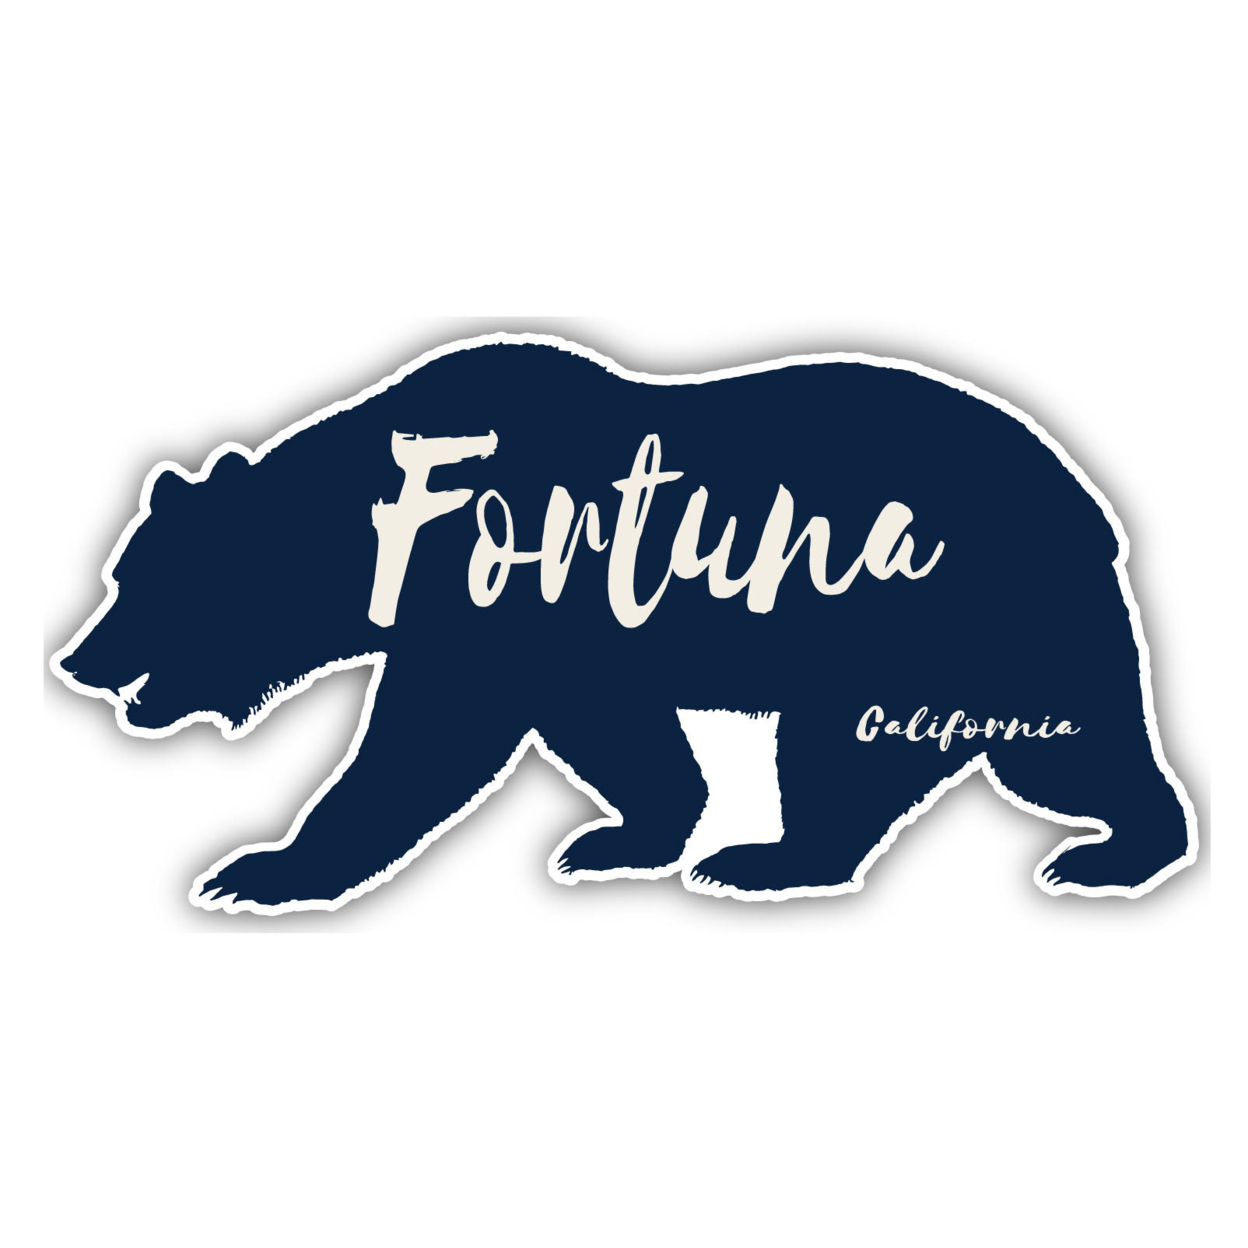 Fortuna California Souvenir Decorative Stickers (Choose Theme And Size) - Single Unit, 4-Inch, Tent